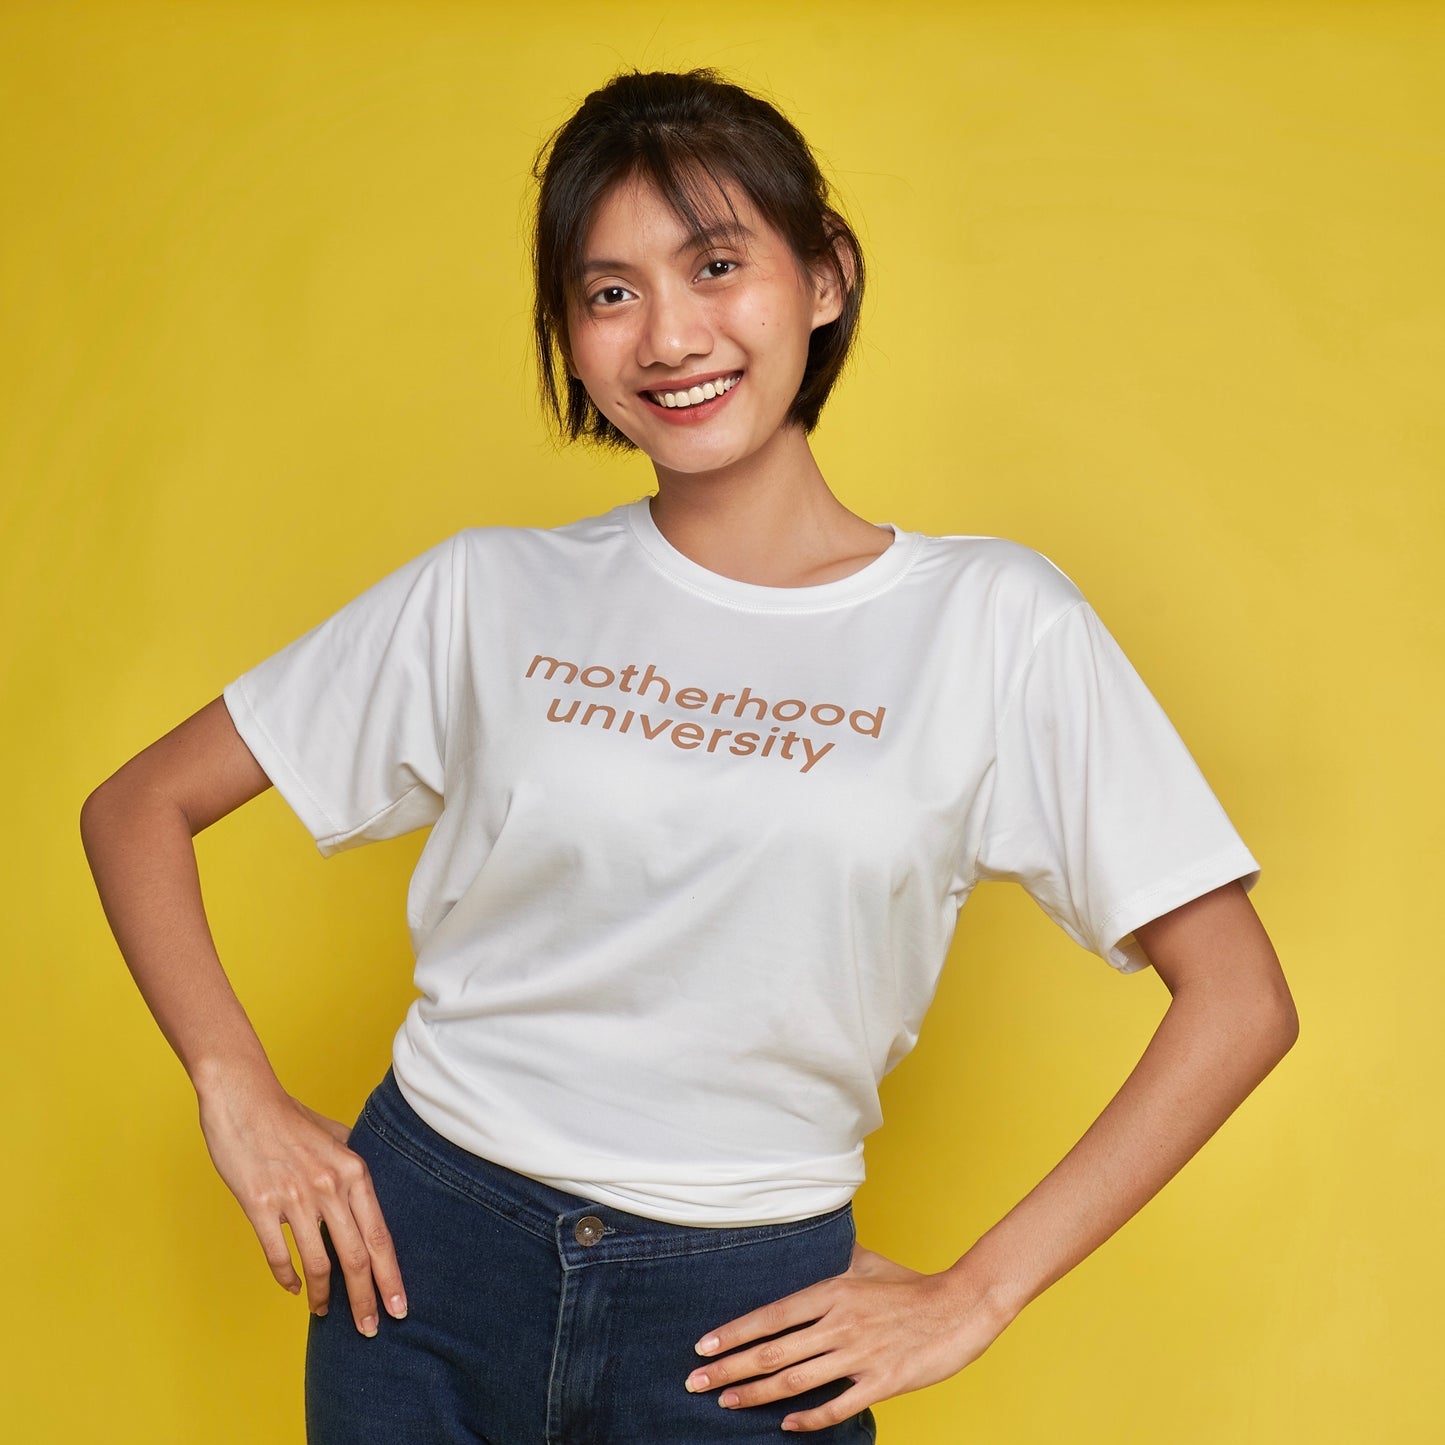 Motherhood University Mom Statement Shirt